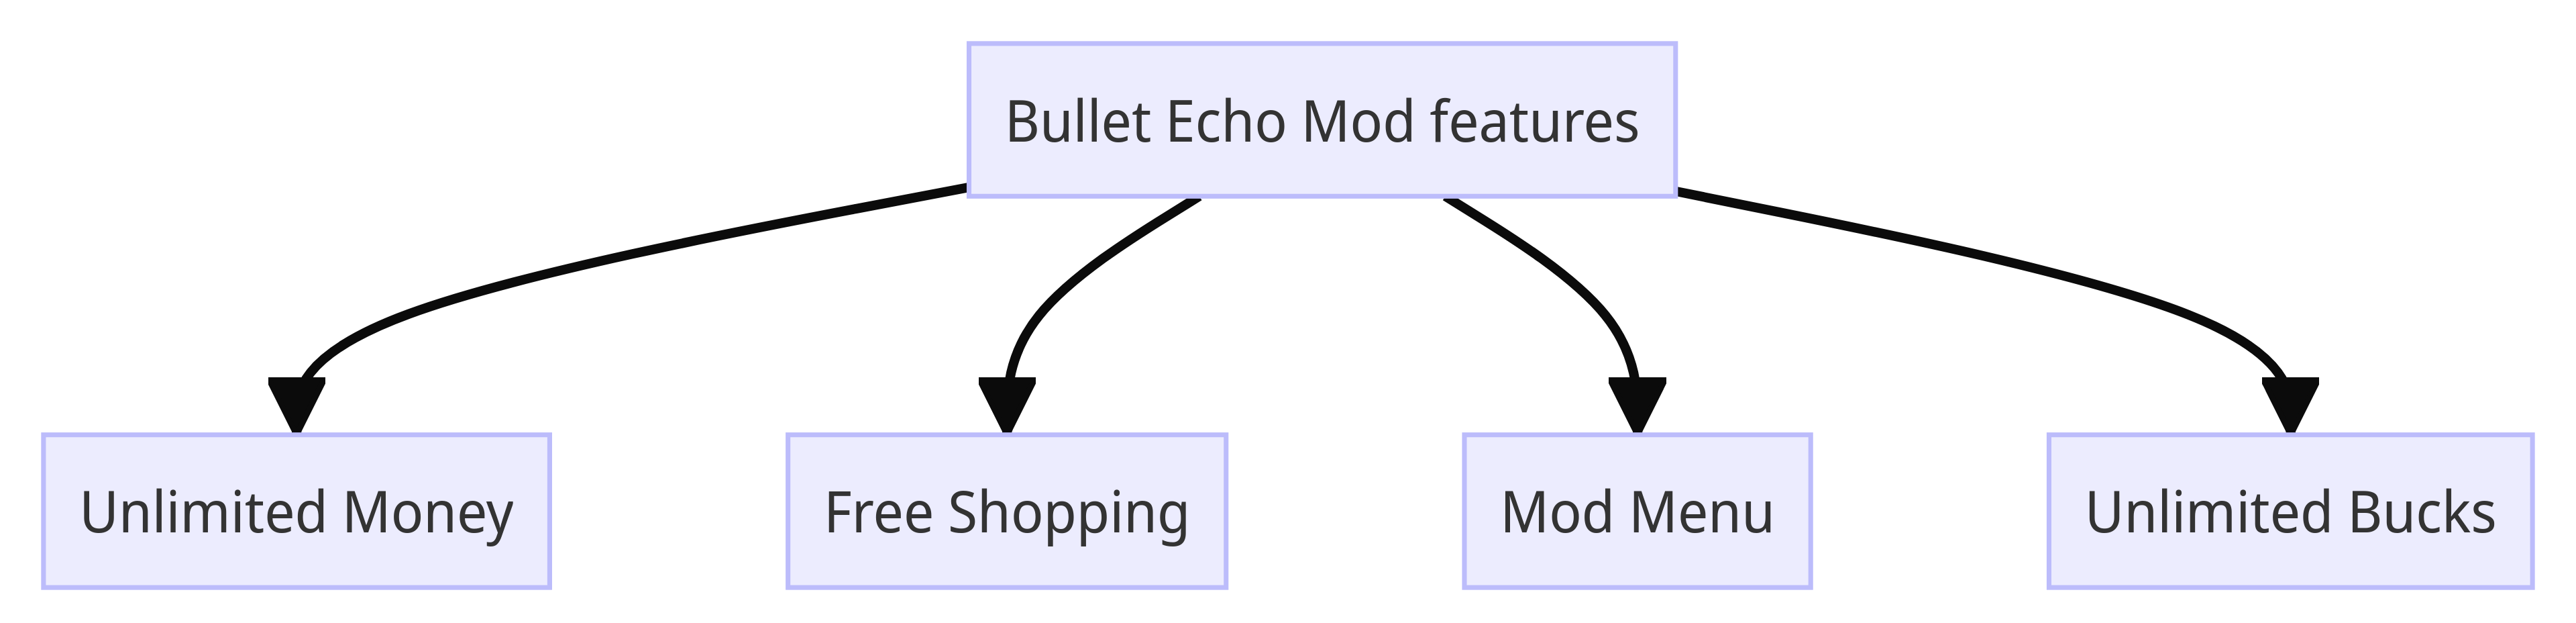 Bullet Echo Mod features